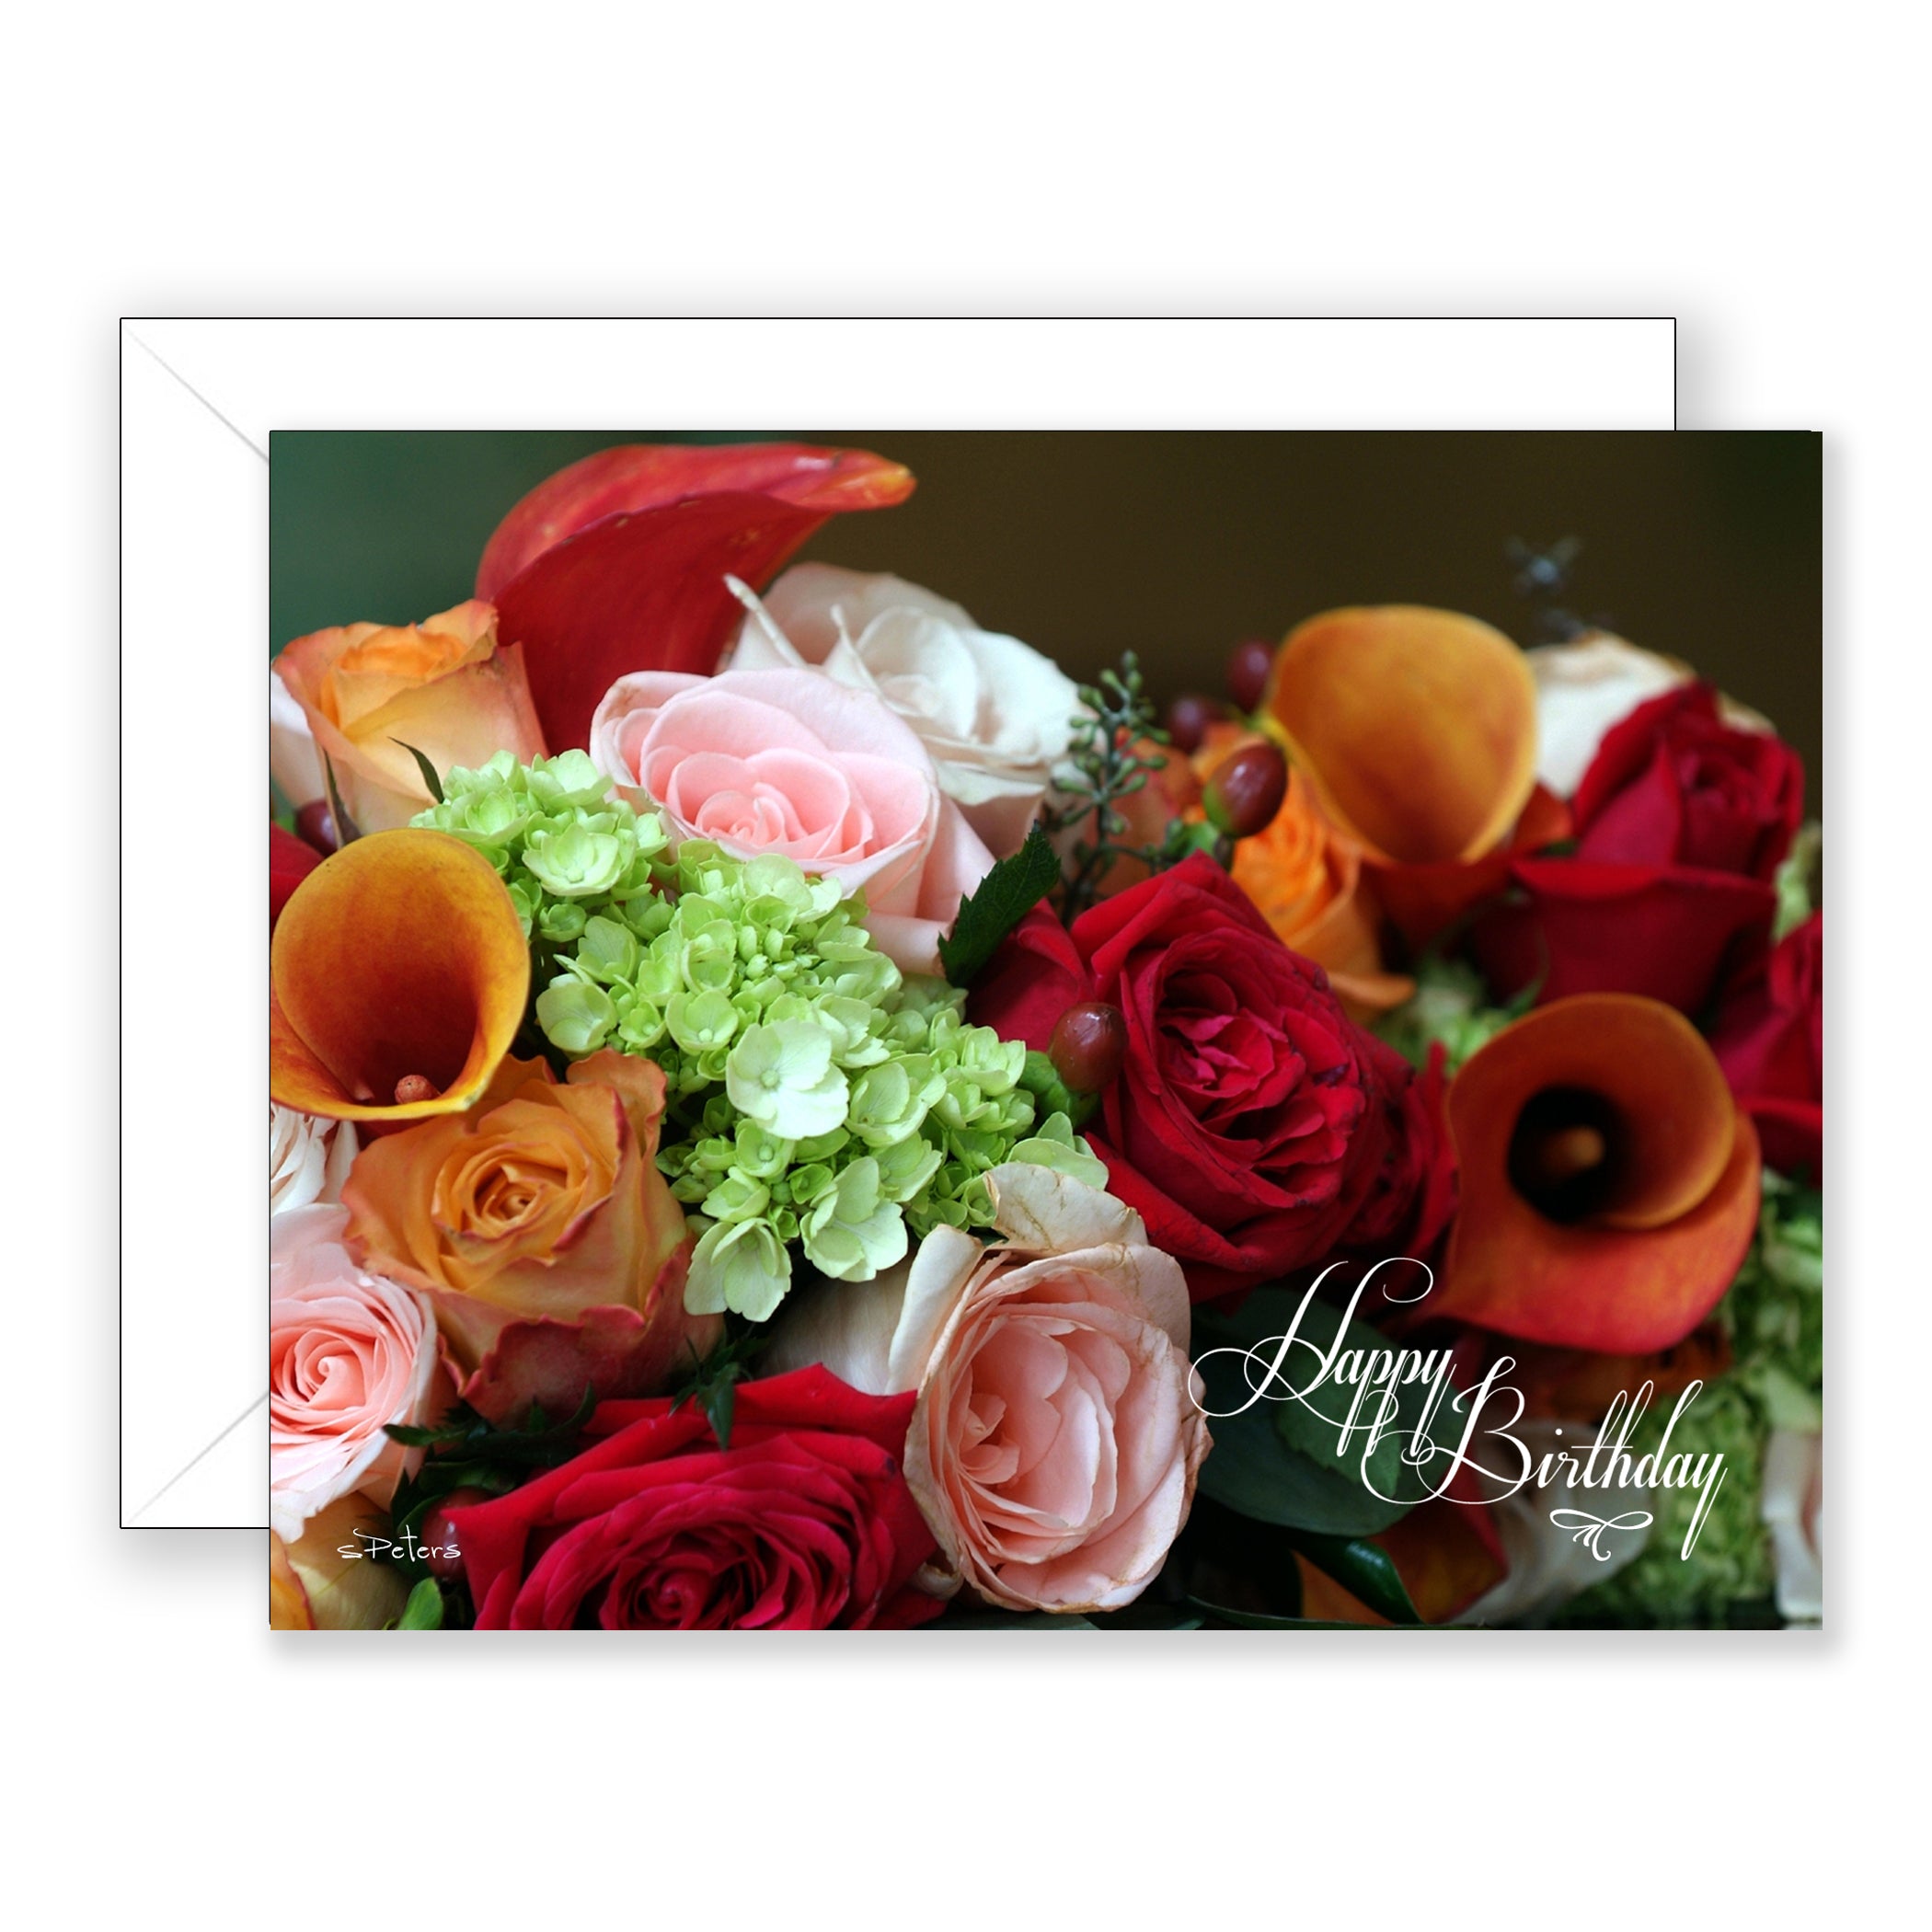 Ashley's Wedding Flowers (Romans 15:13) - Birthday Card